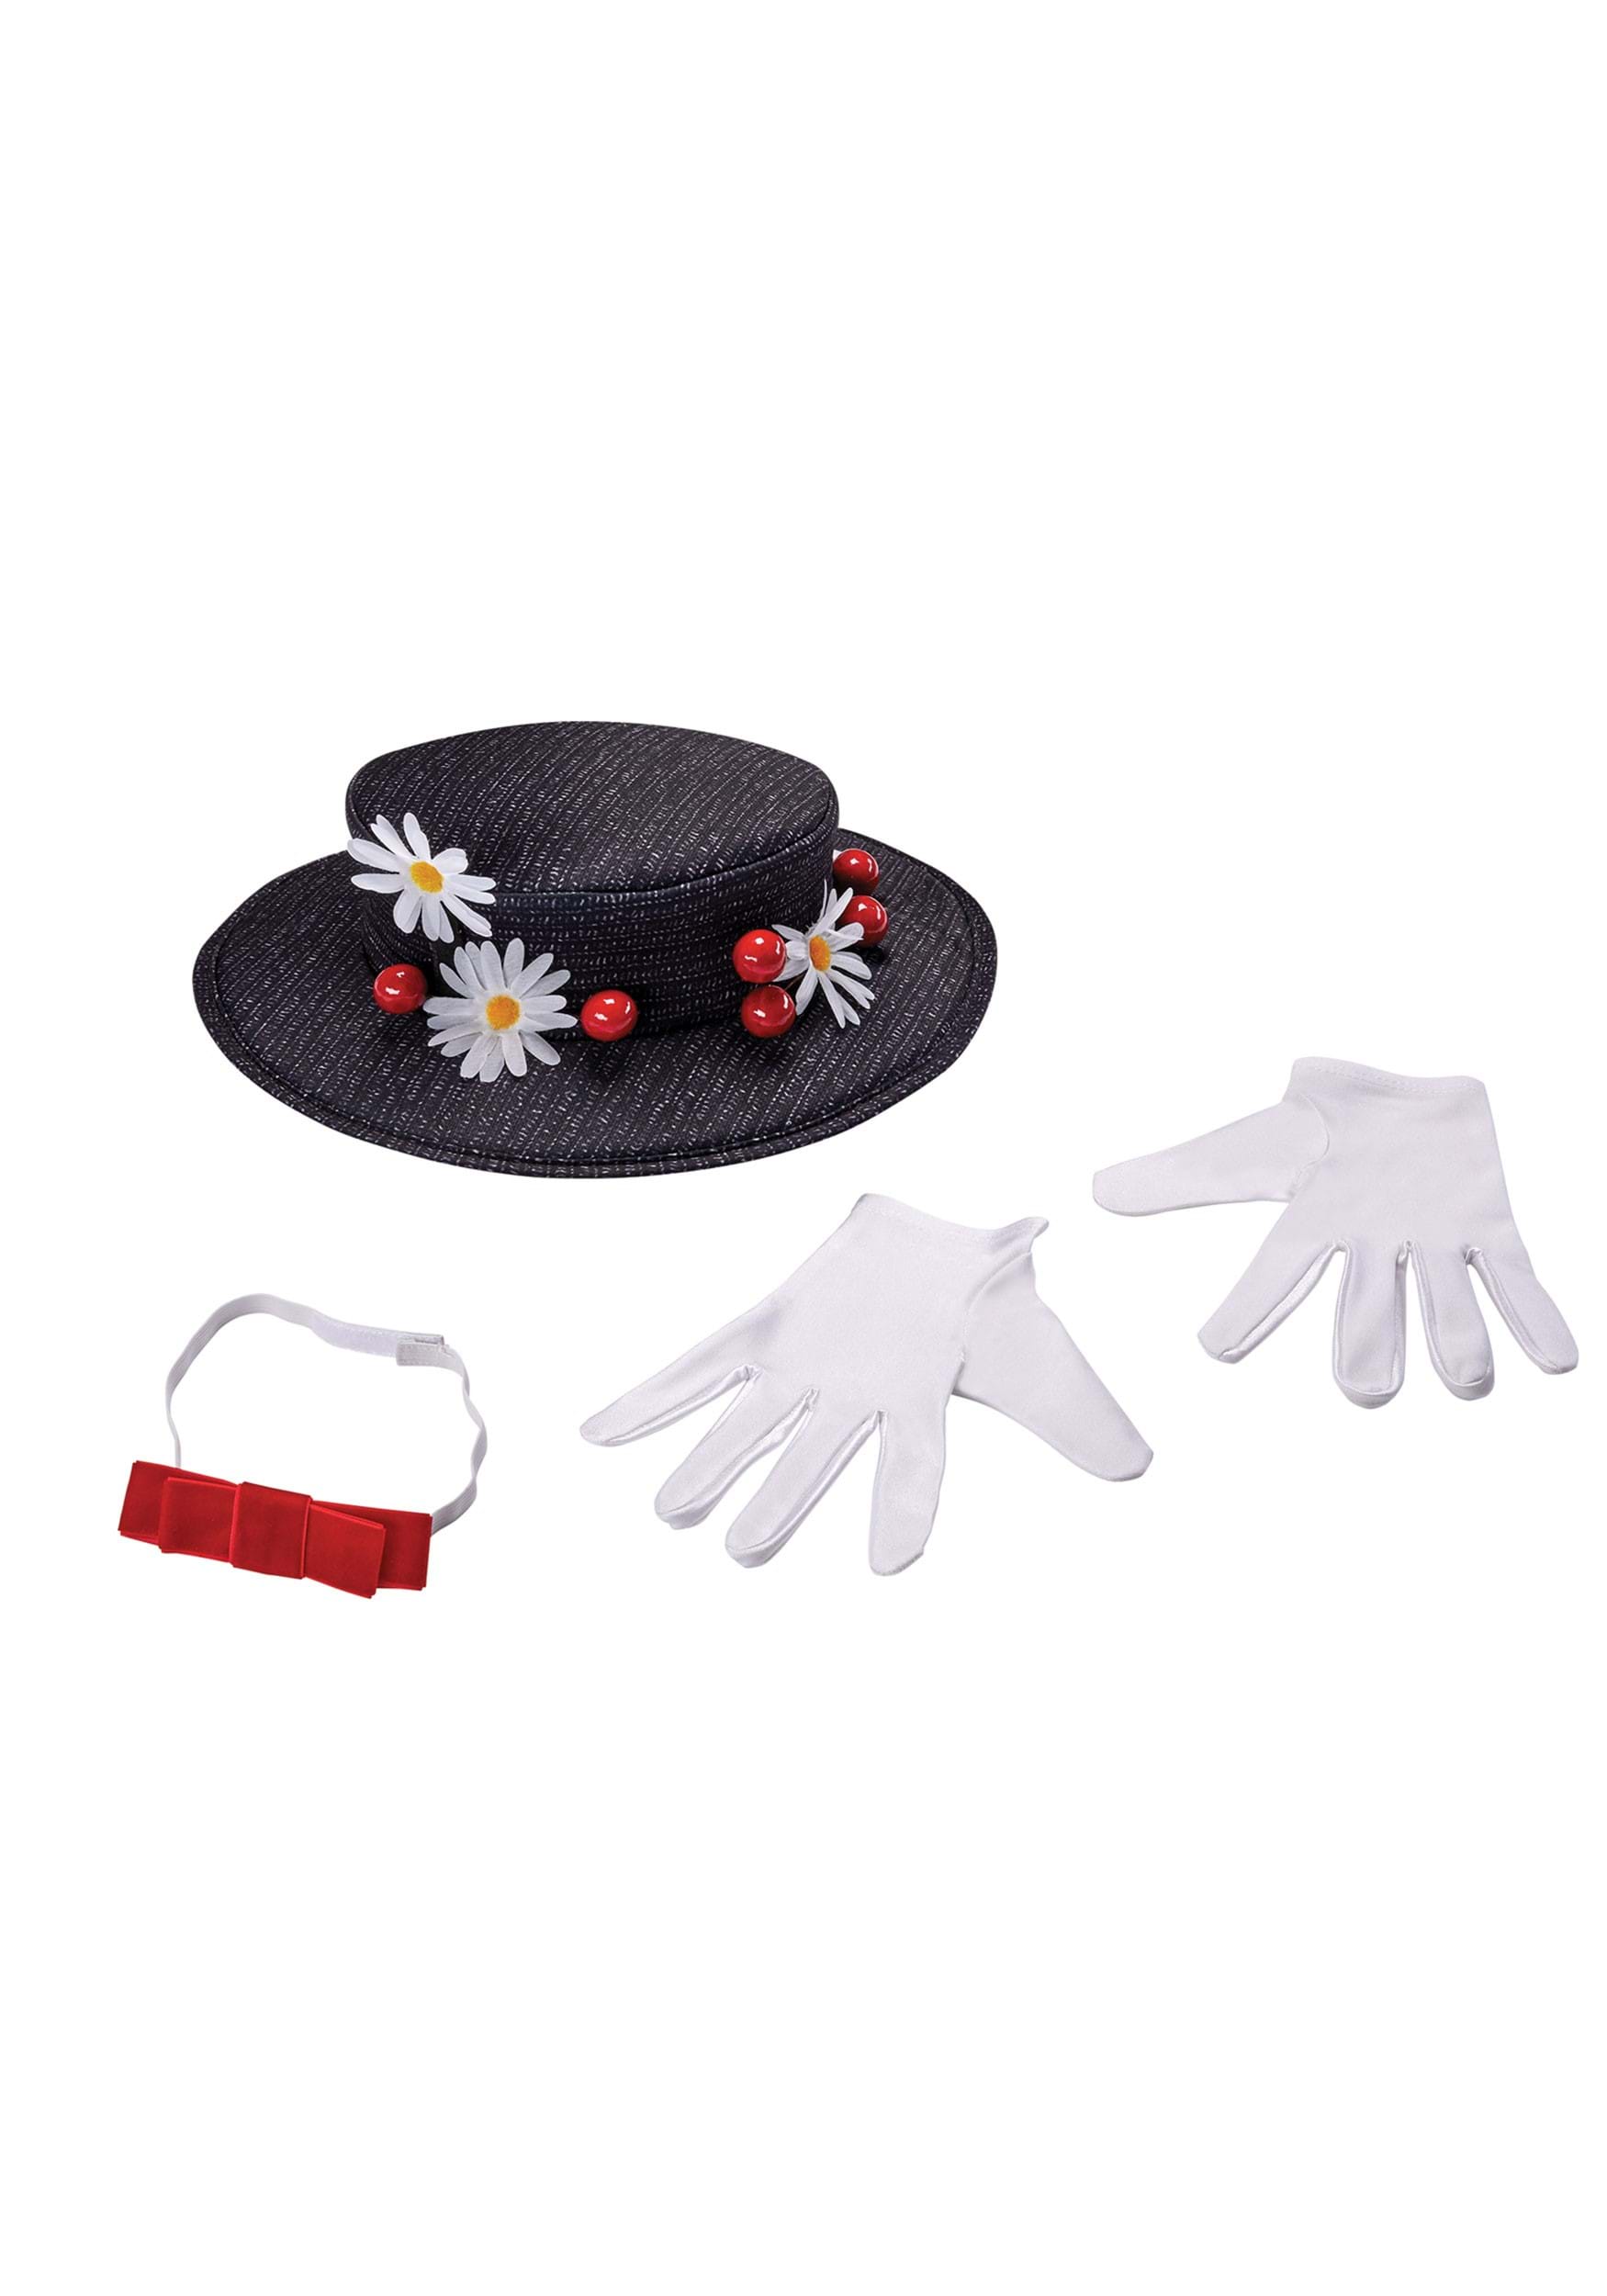 Disney Mary Poppins Fancy Dress Costume Kit For Women , Disney Accessories